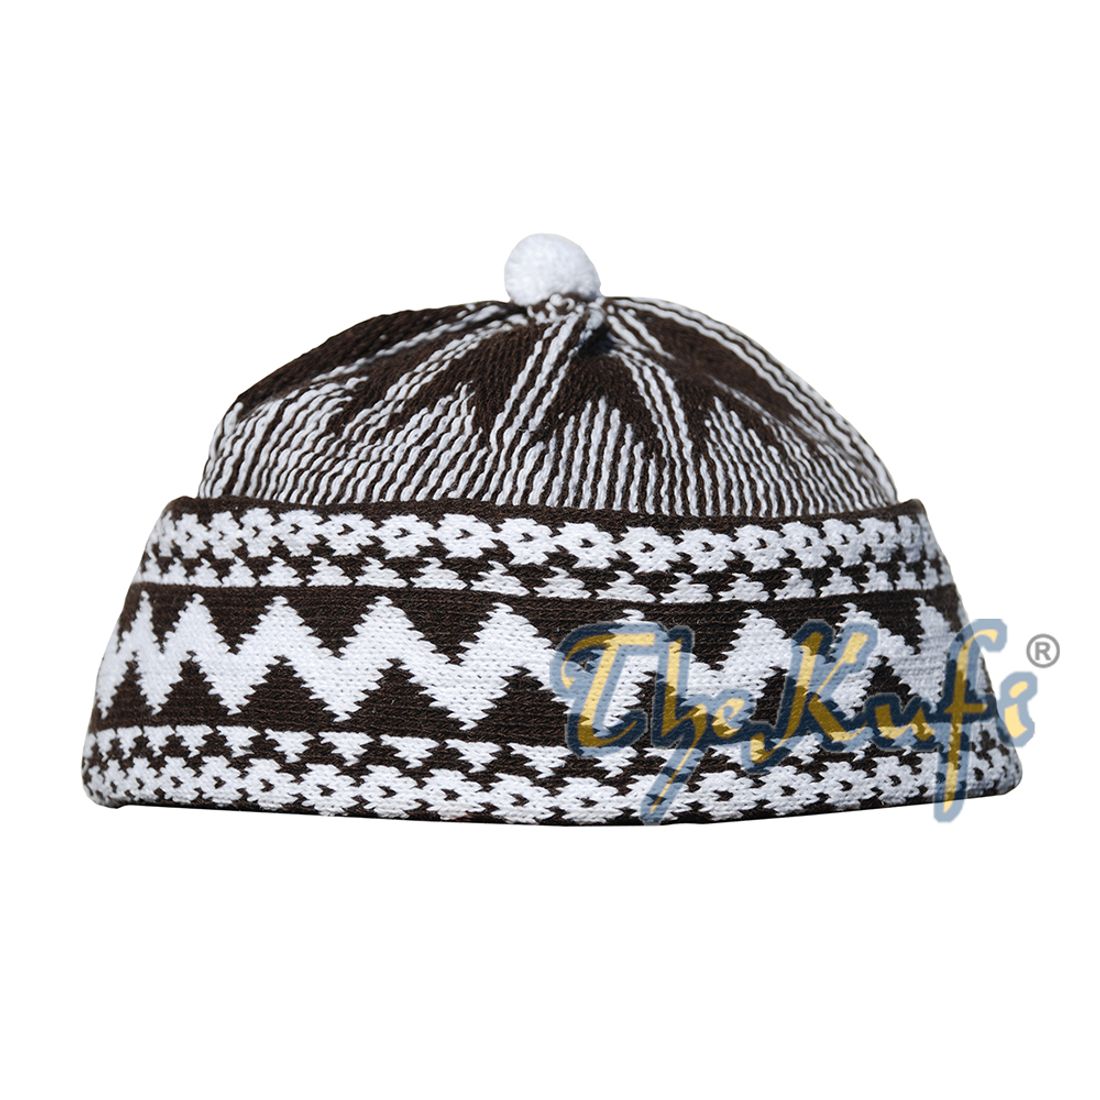 Warm Dark Brown Cotton Blend Zigzag Beanie Kufi Hat with Ball on Top